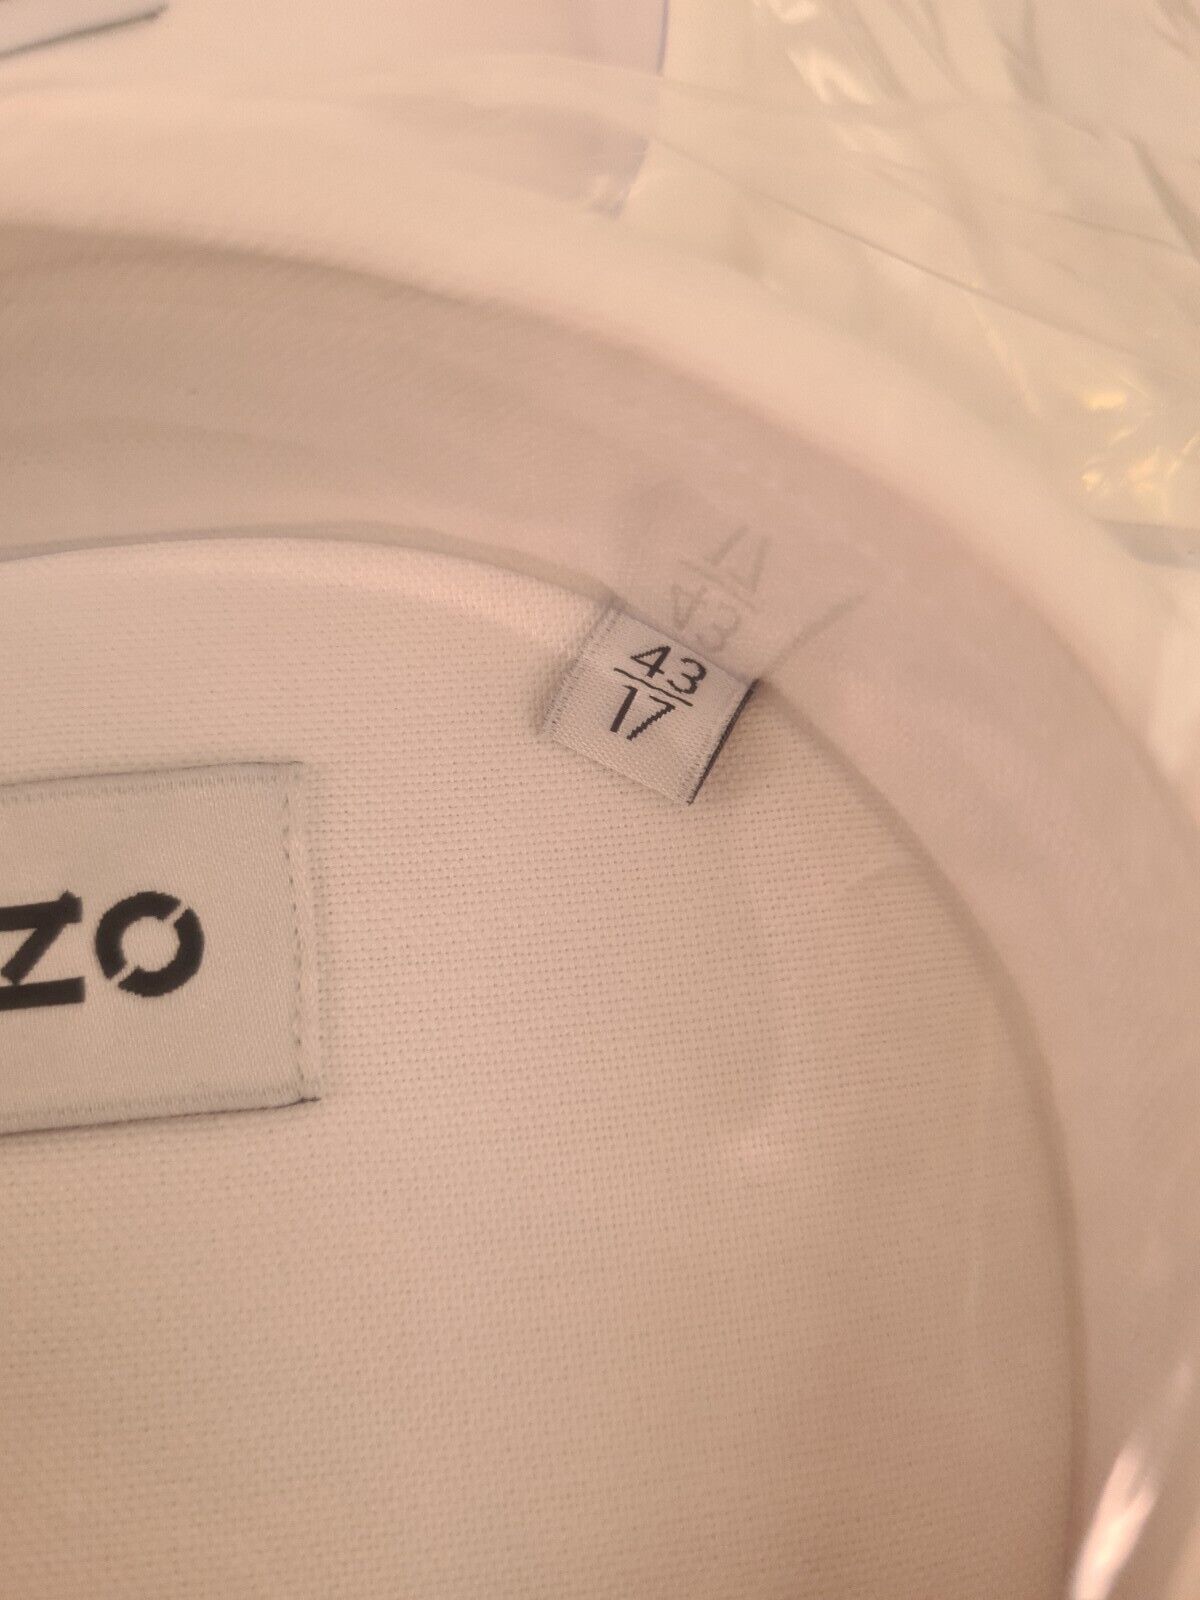 Kenzo Tiger Crest Button Down White Shirt. Size 43. 17****Ref V32